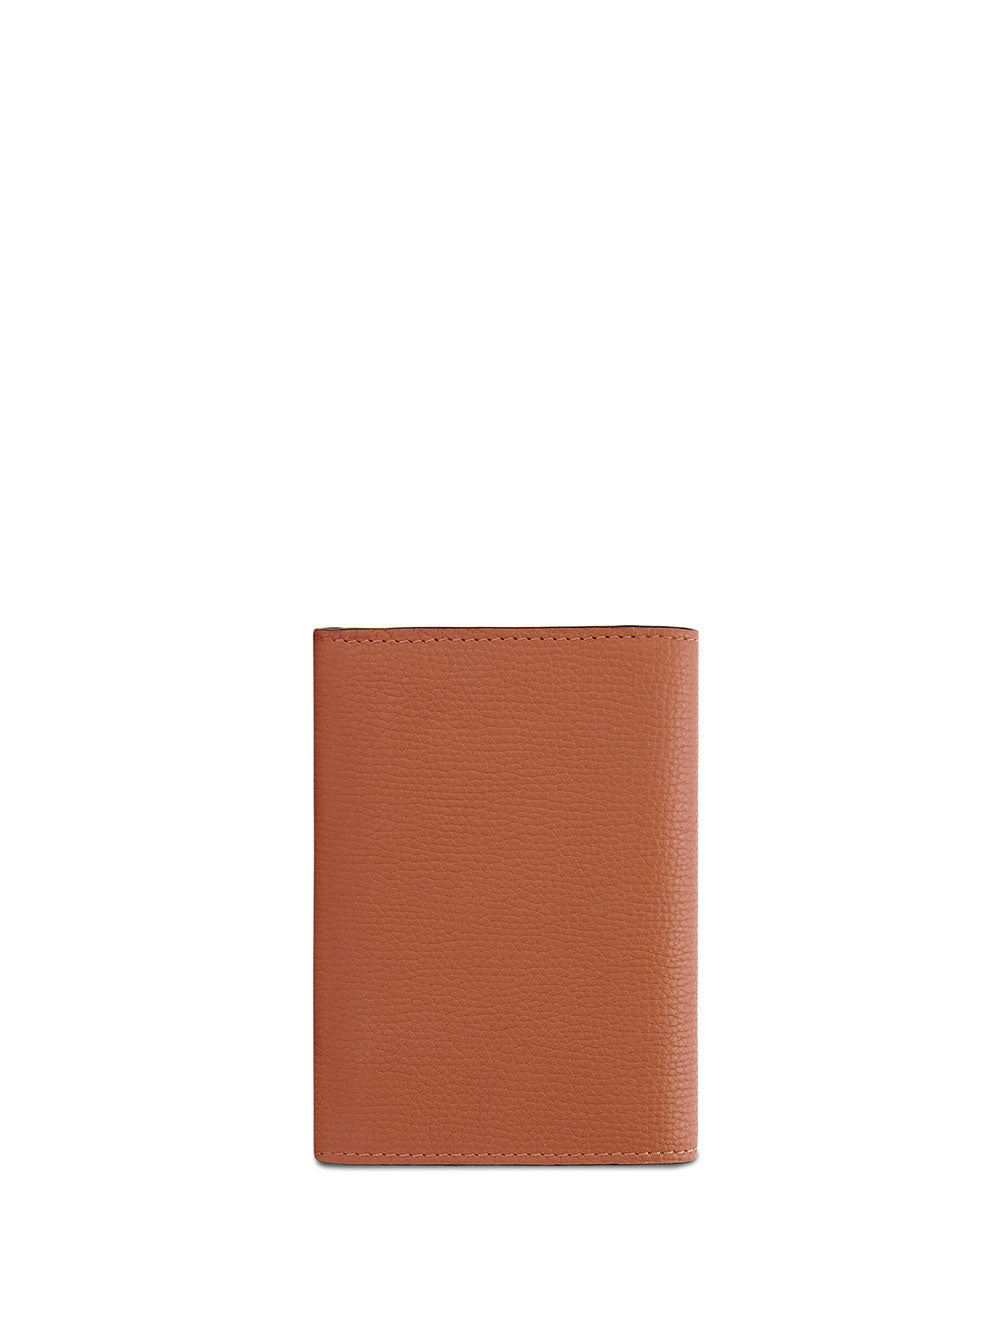 Anagram small vertical wallet in pebble grain calfskin